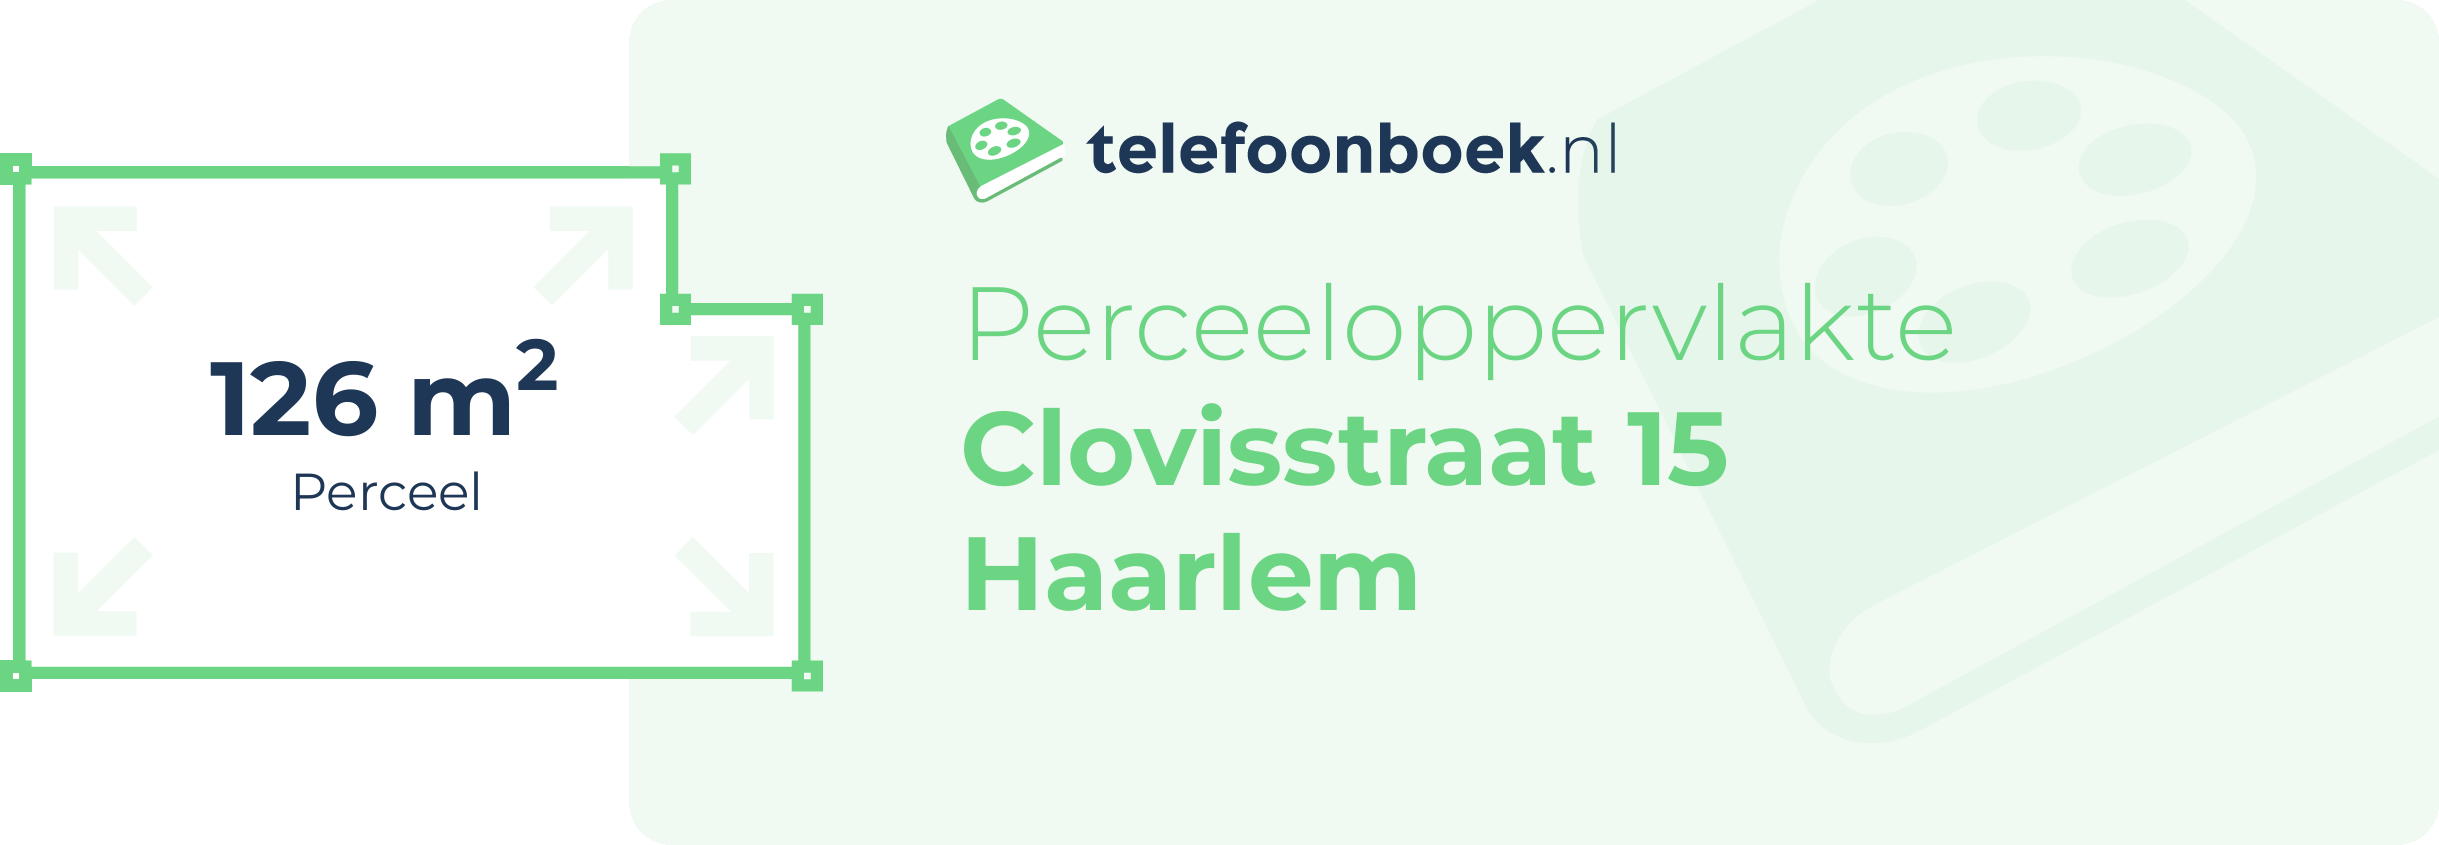 Perceeloppervlakte Clovisstraat 15 Haarlem